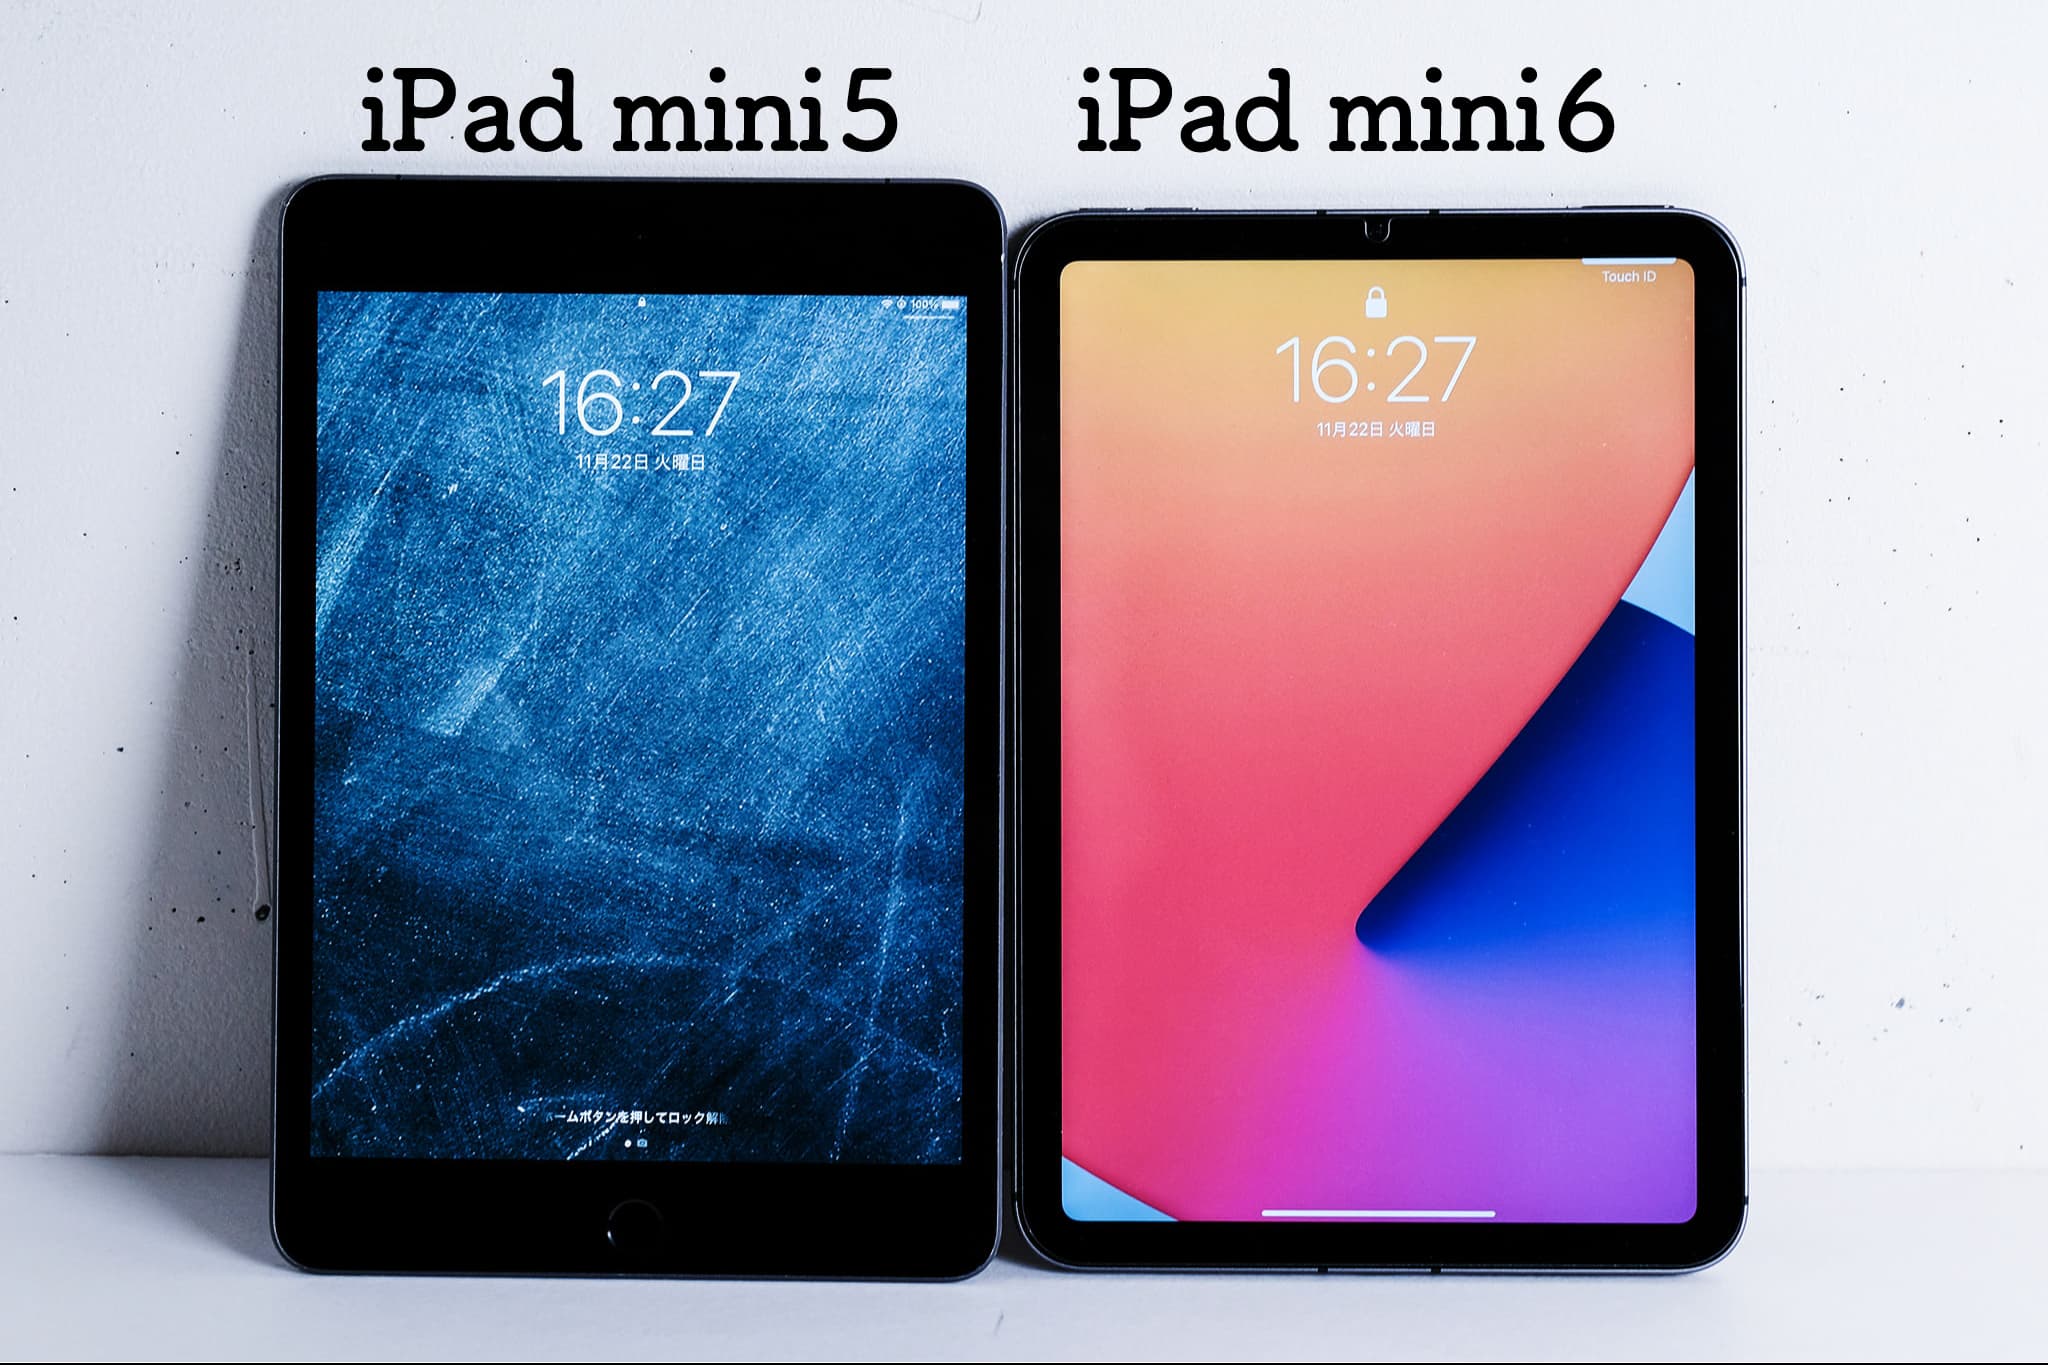 iPad mini6って何が変わった？
iPad mini ５世代／６世代 比較
ポイントは「9つの進化」